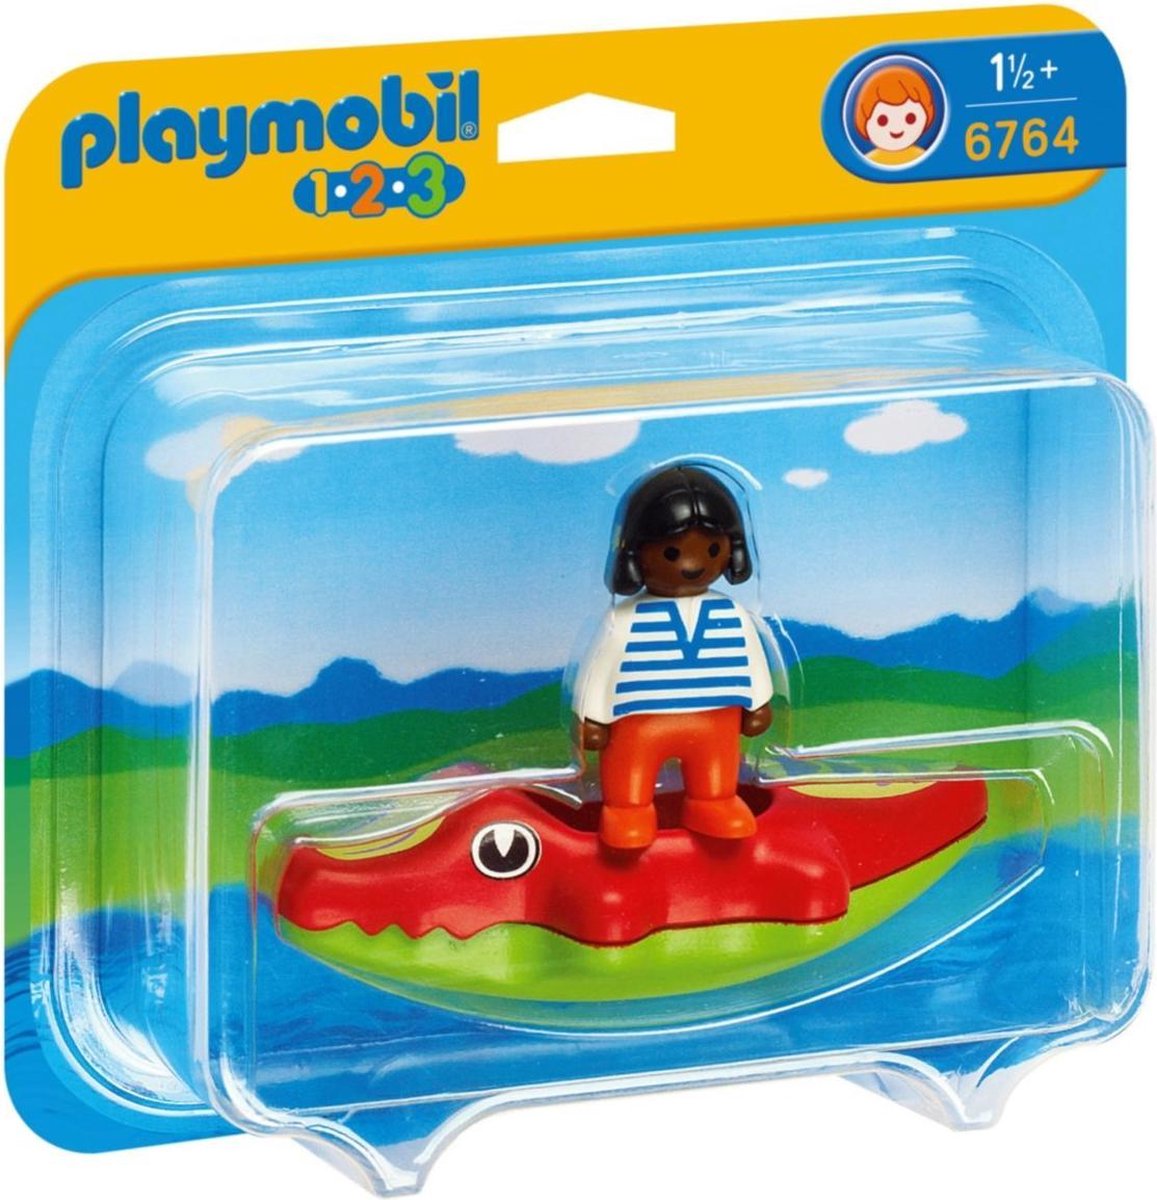 Playmobil 123 Fille avec Crocodile - 6764 | bol.com